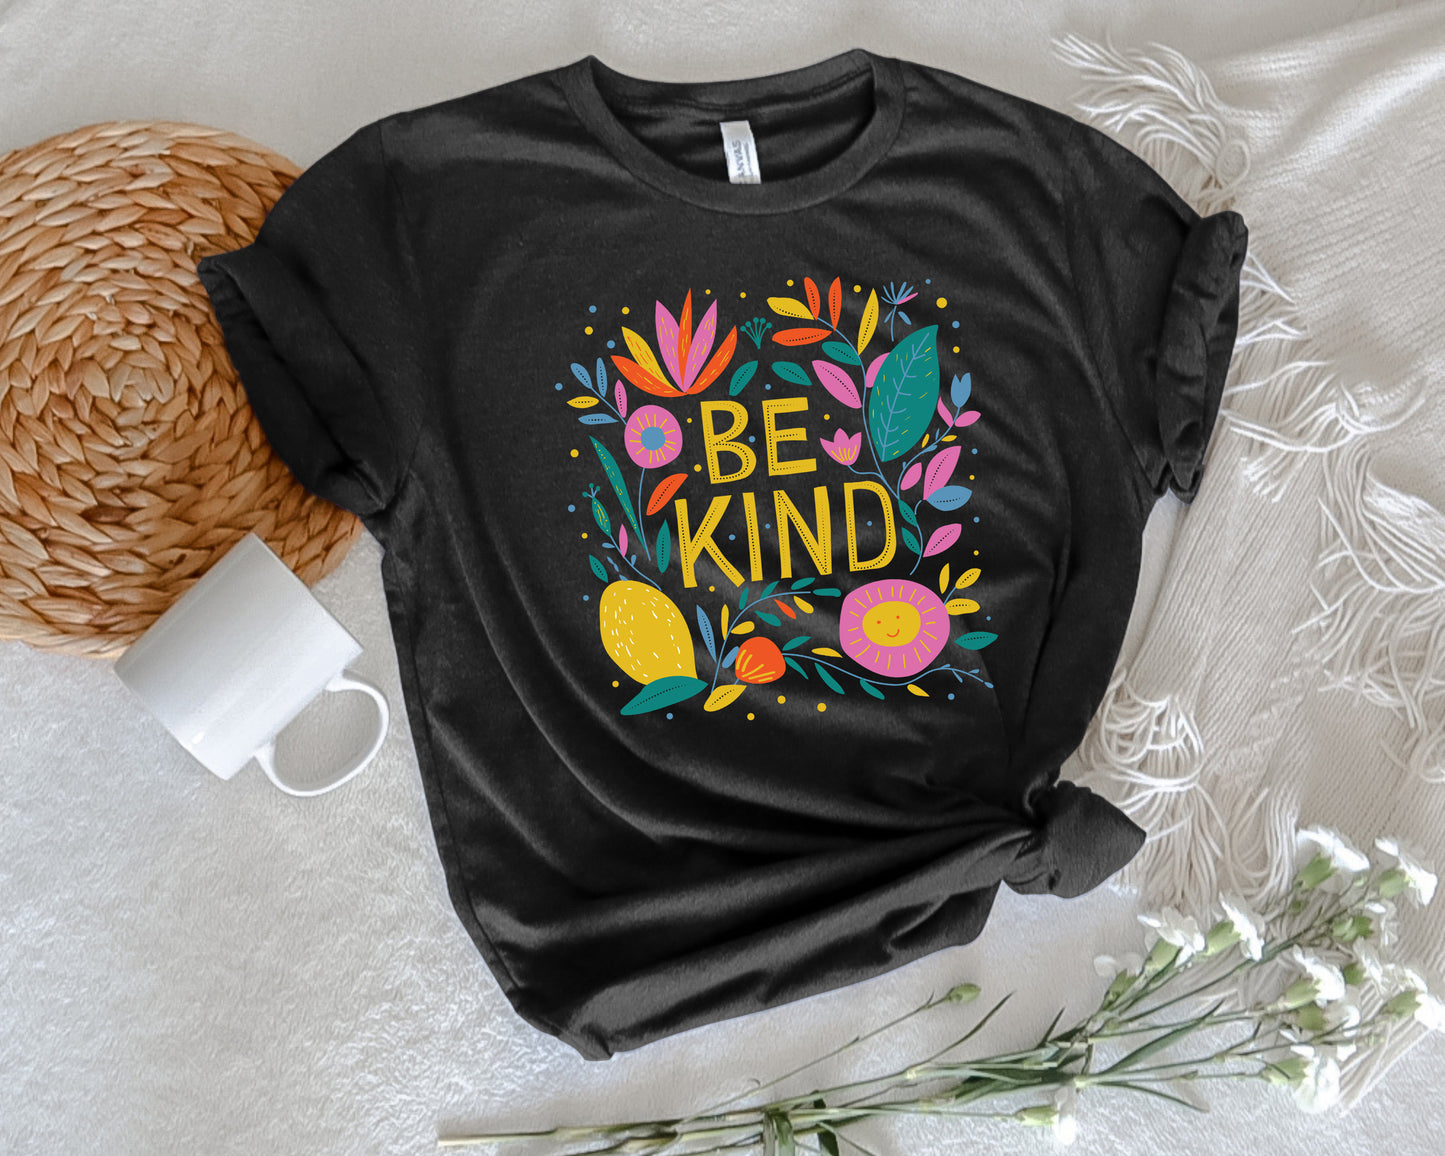 Be Kind Unisex T-Shirt